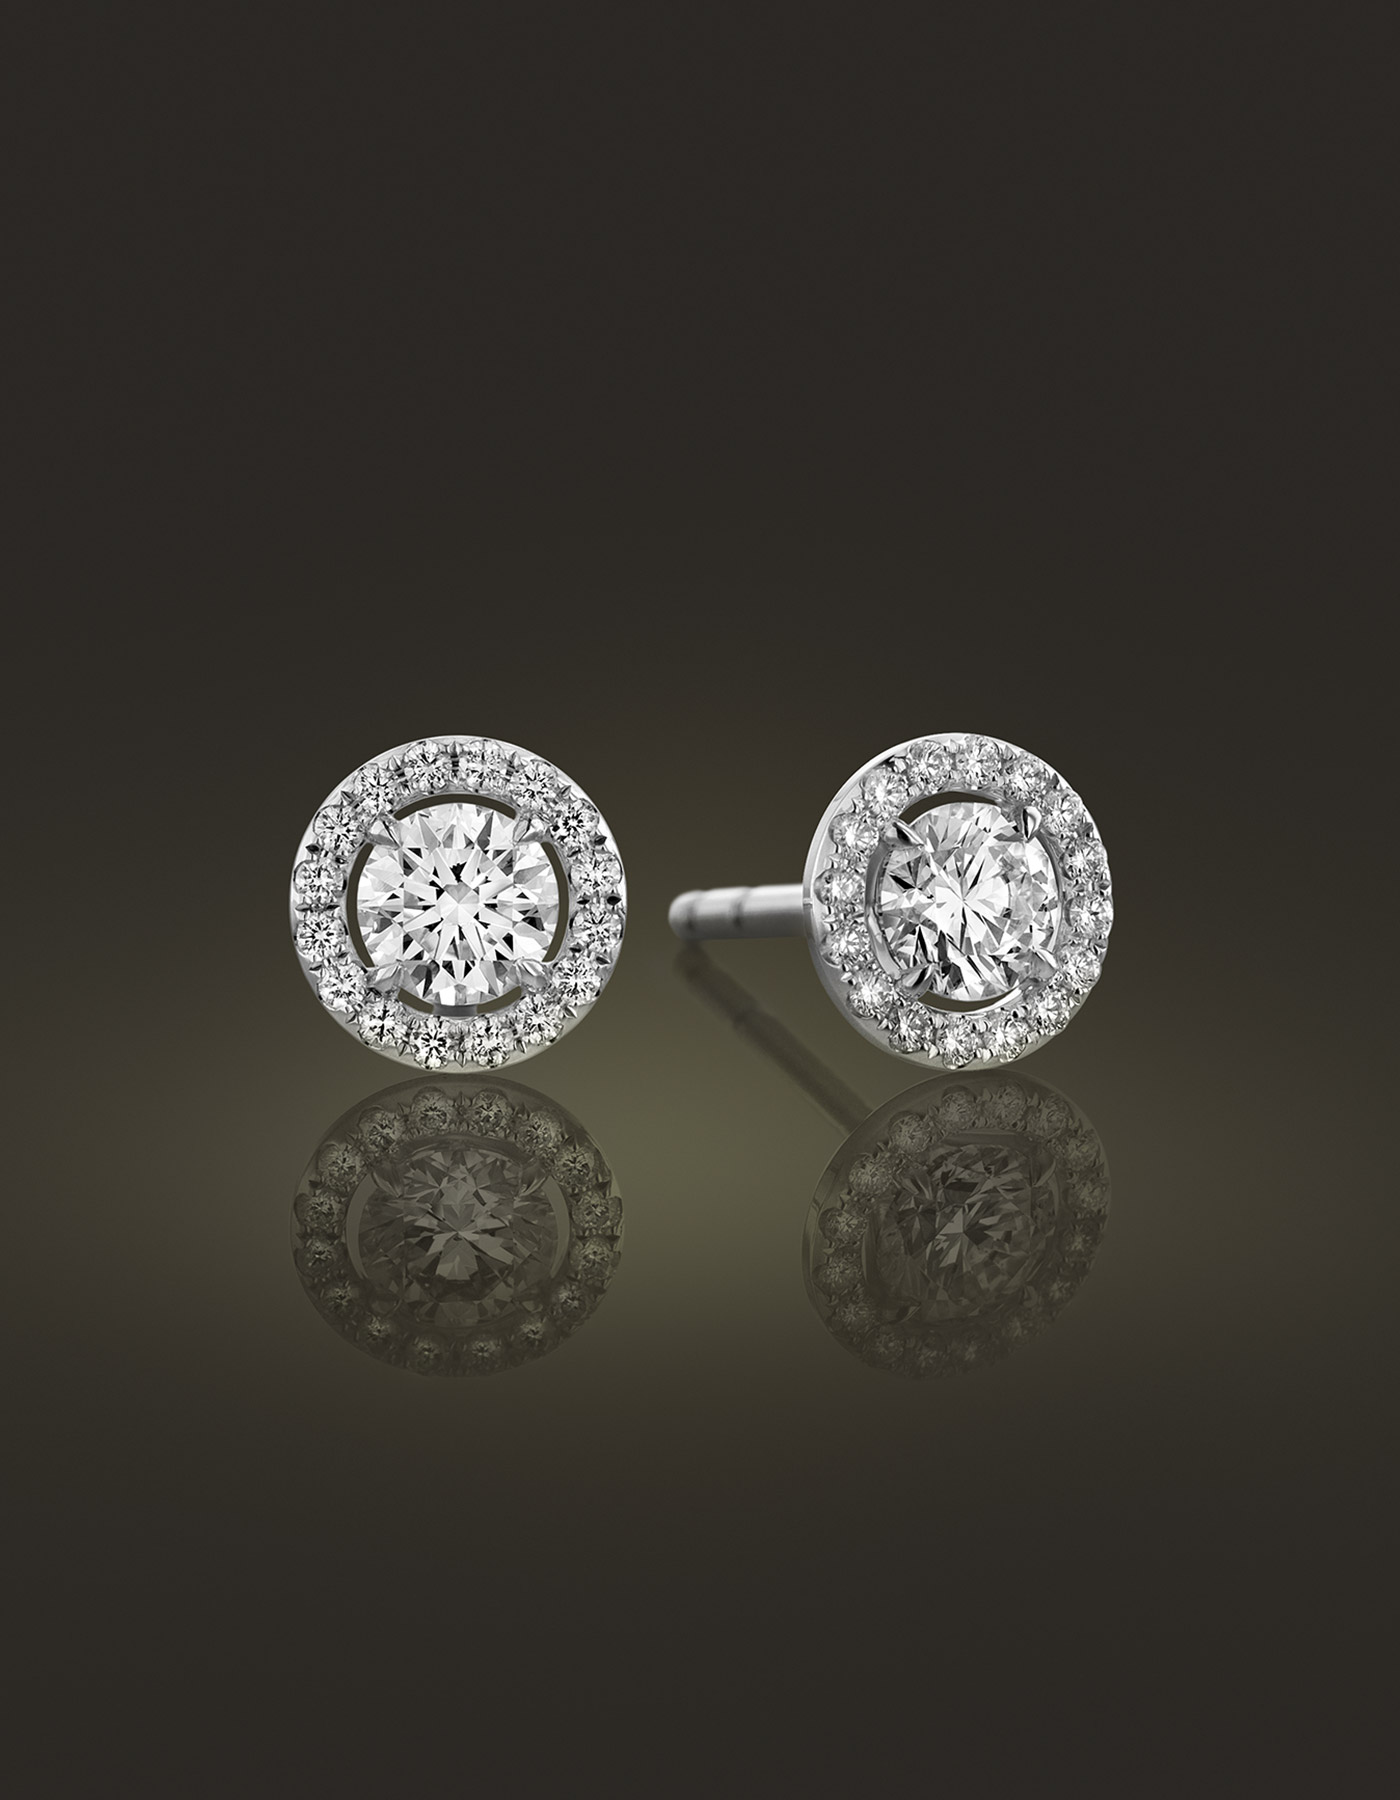 Guinnot Anonymous Halo diamond earrings in 18k white gold